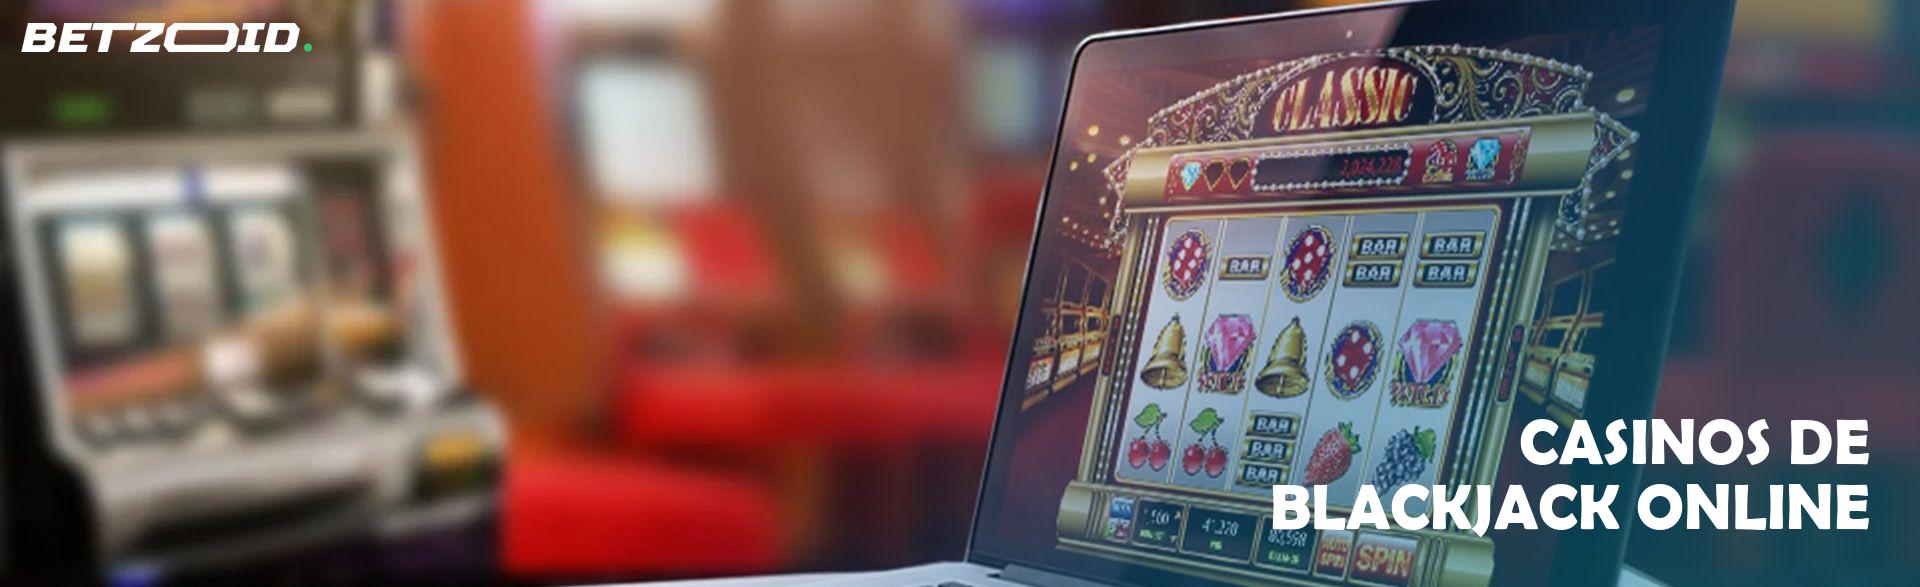 Casinos de Blackjack Online.